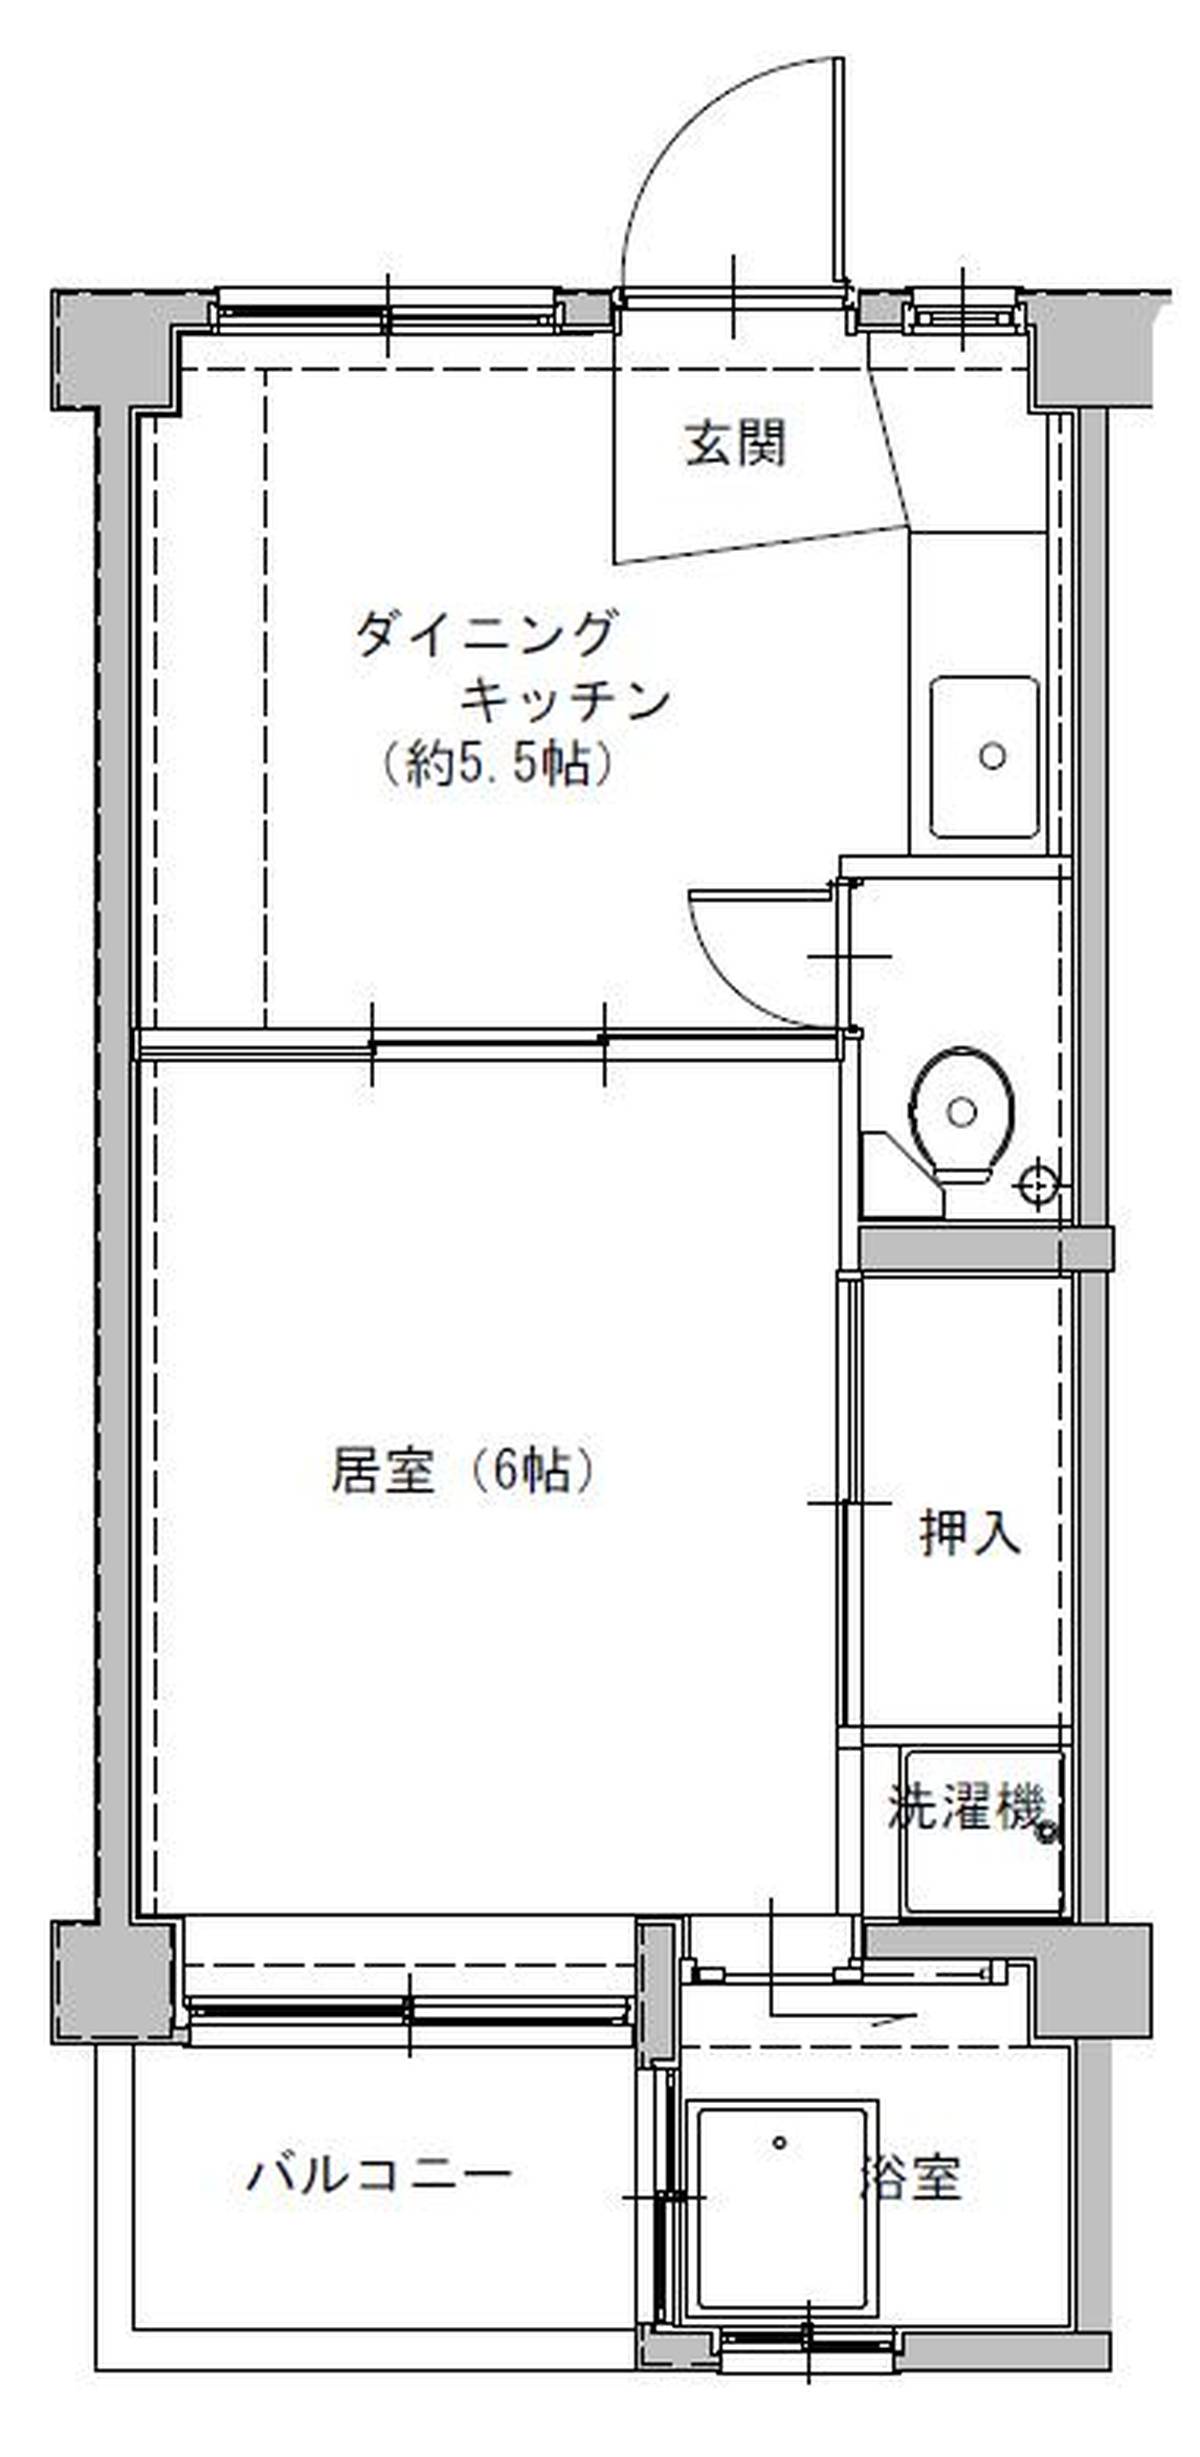 1DK floorplan of Village House Kuzunoha in Izumi-shi